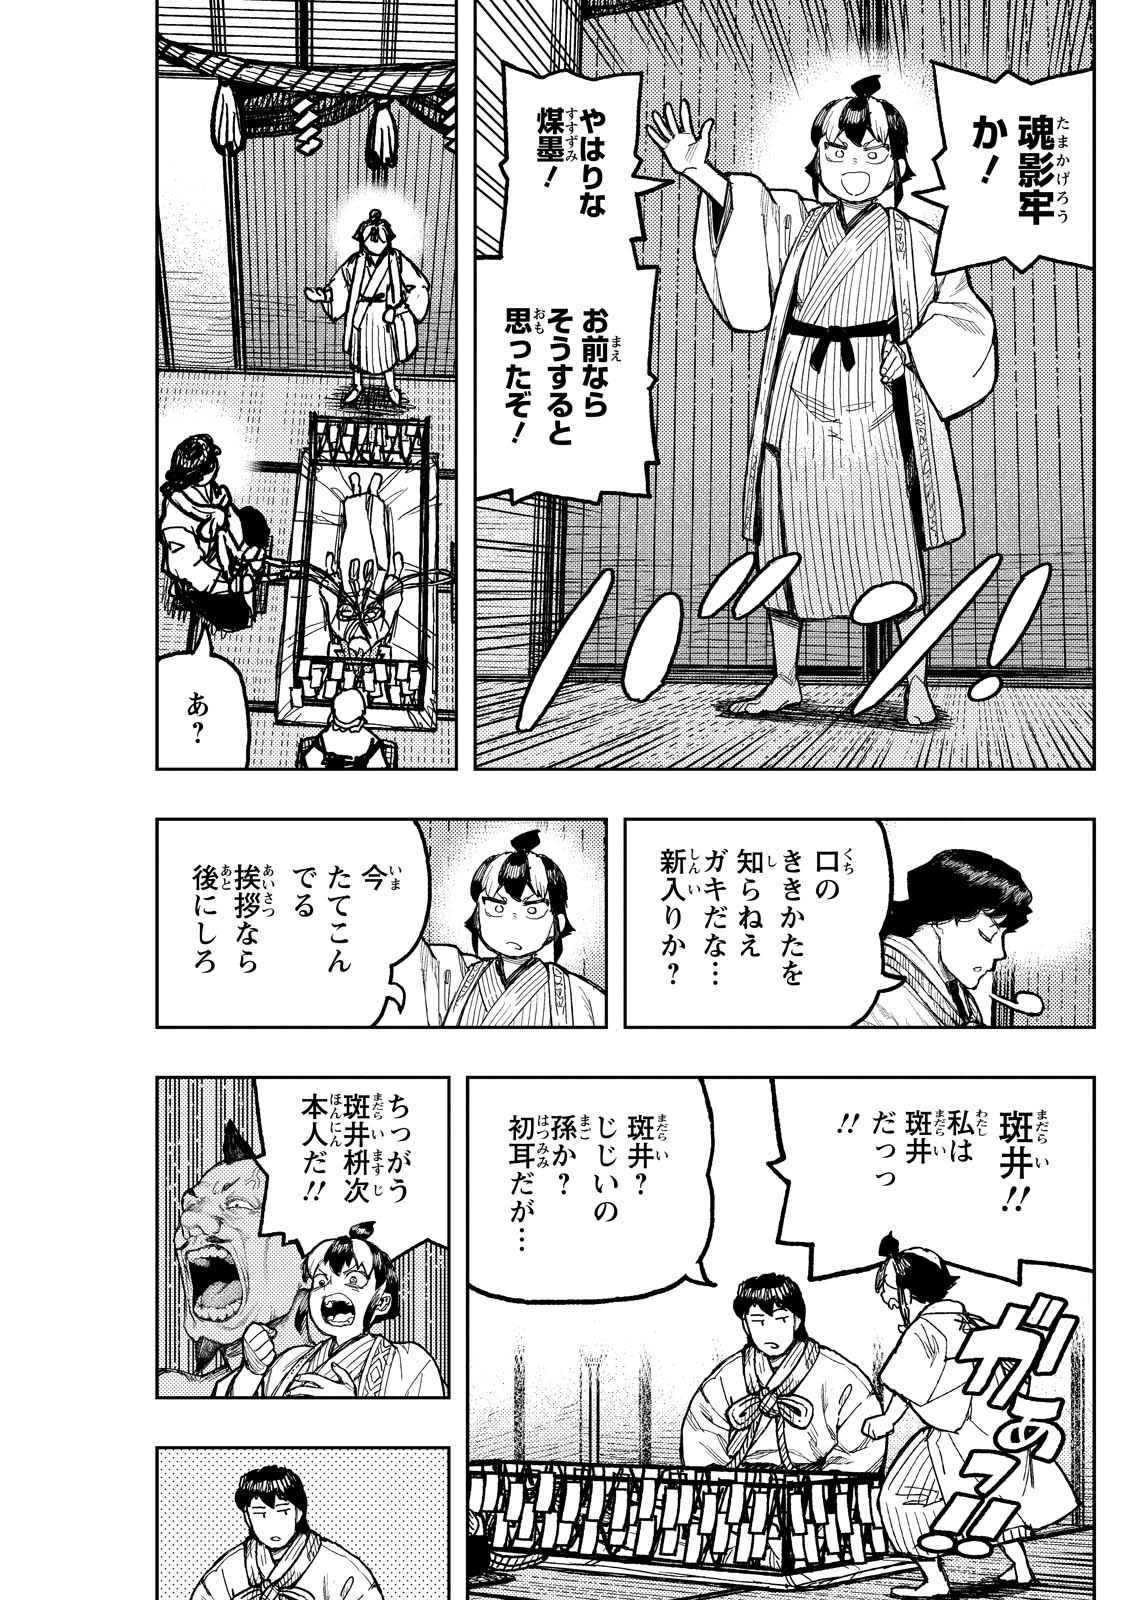 Tsugumomo - Chapter 168 - Page 9